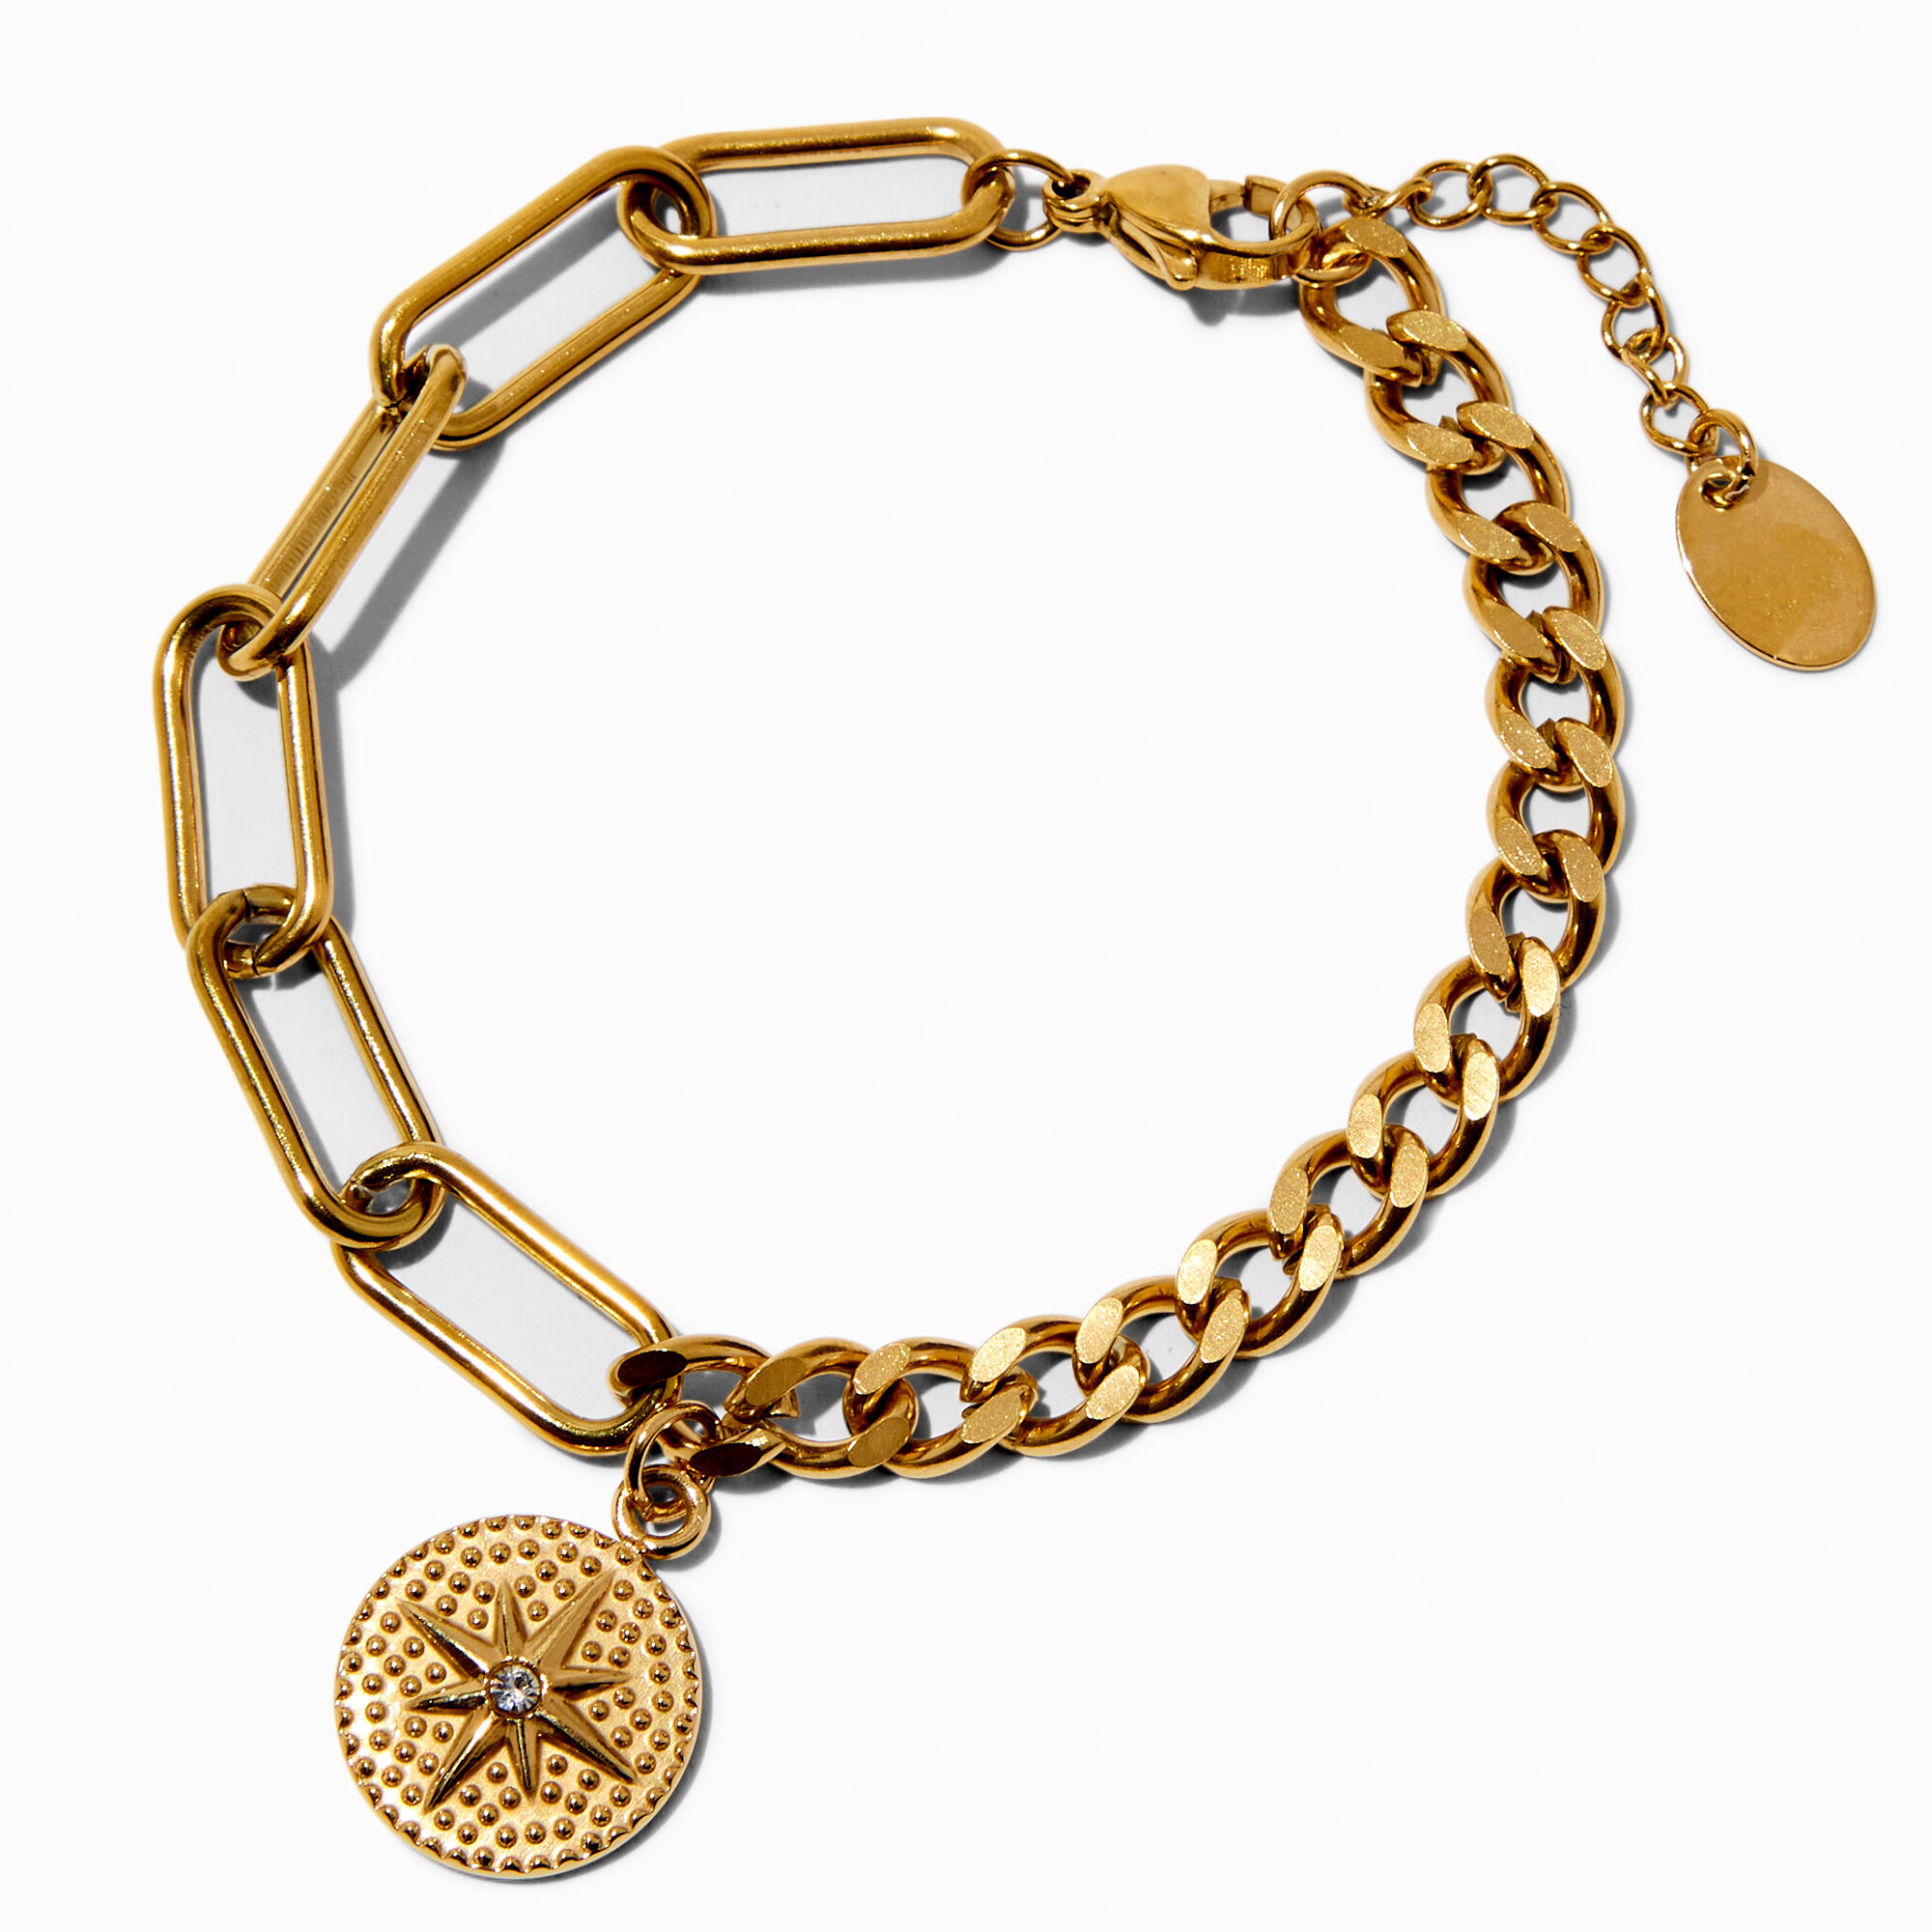 View Claires Tone Compass Charm Chain Bracelet Gold information